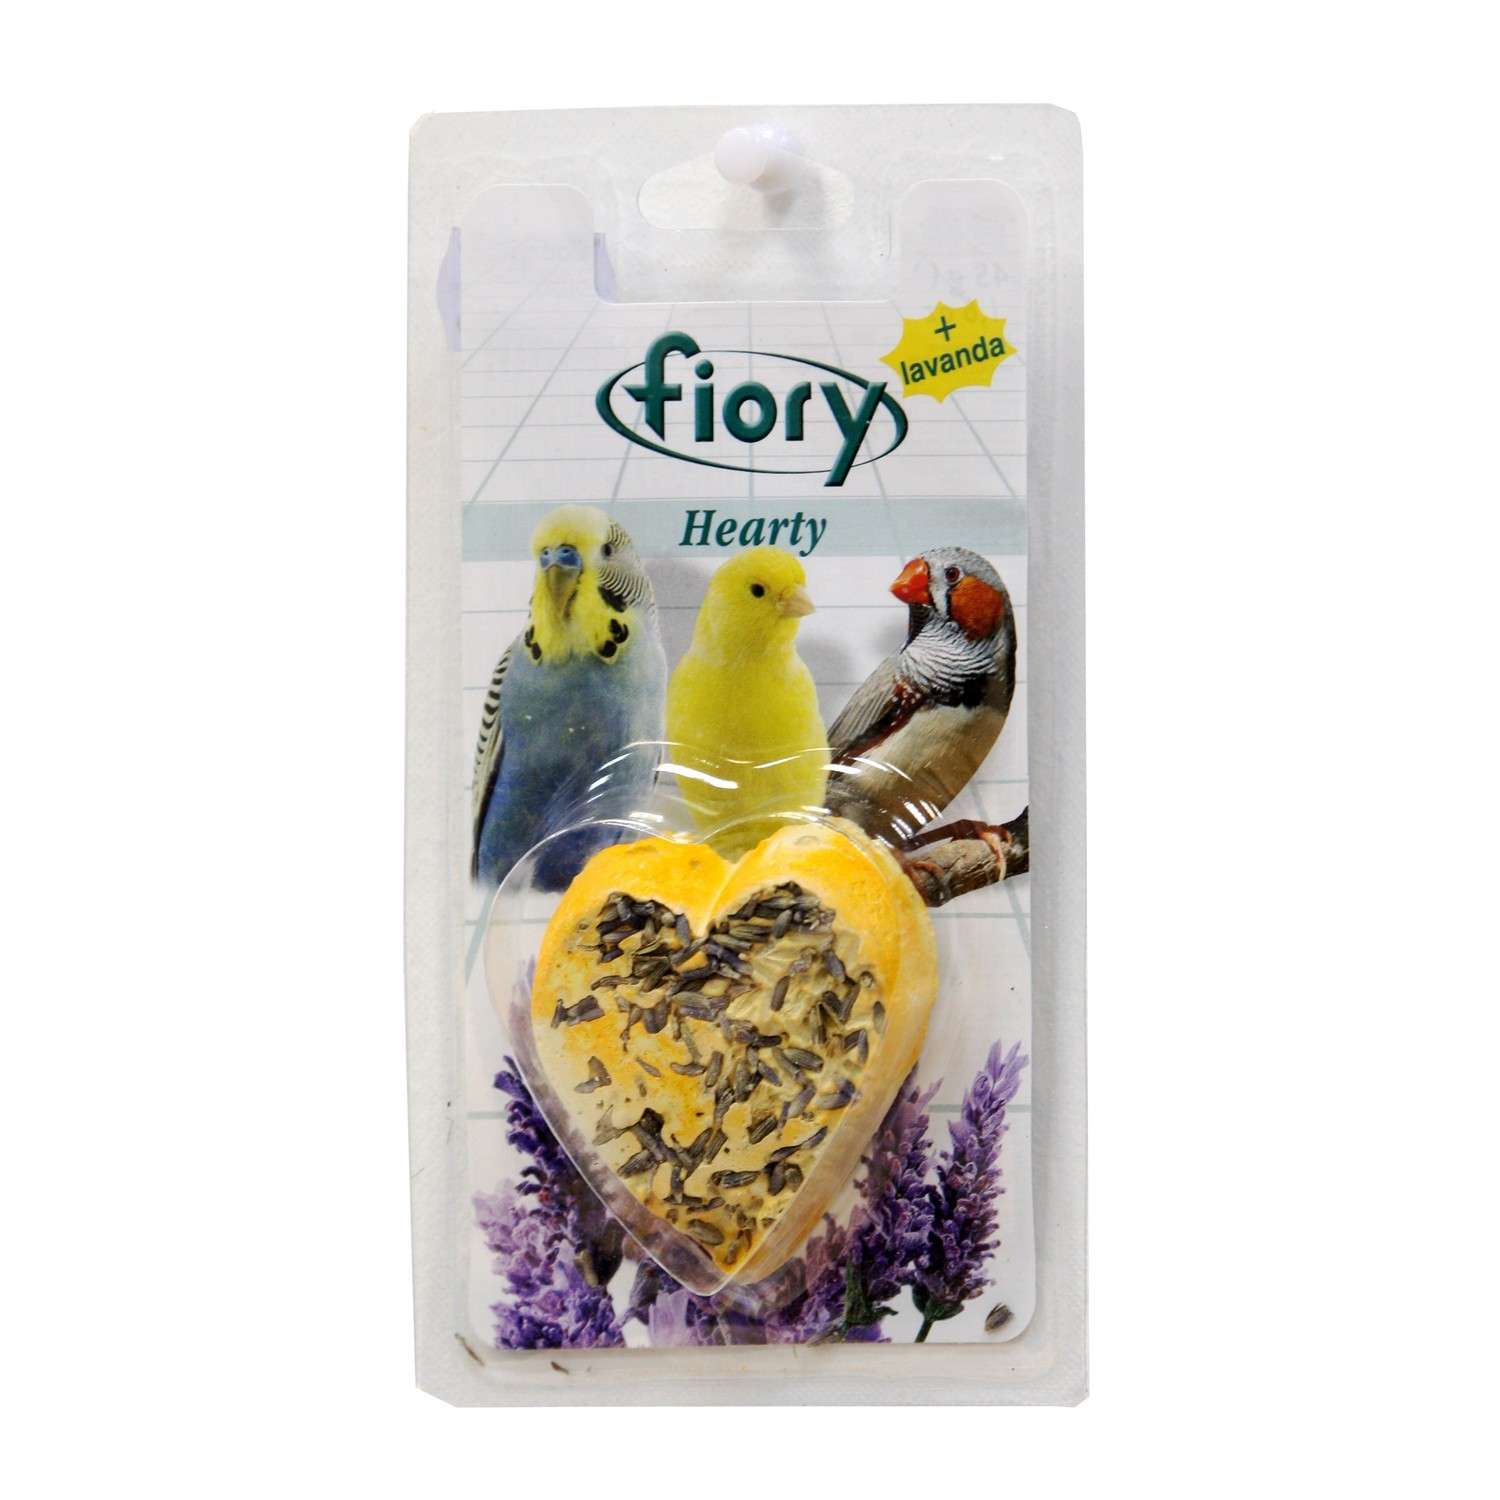 Био-камень для птиц Fiory Hearty с лавандой в форме сердца 45 г - фото 1